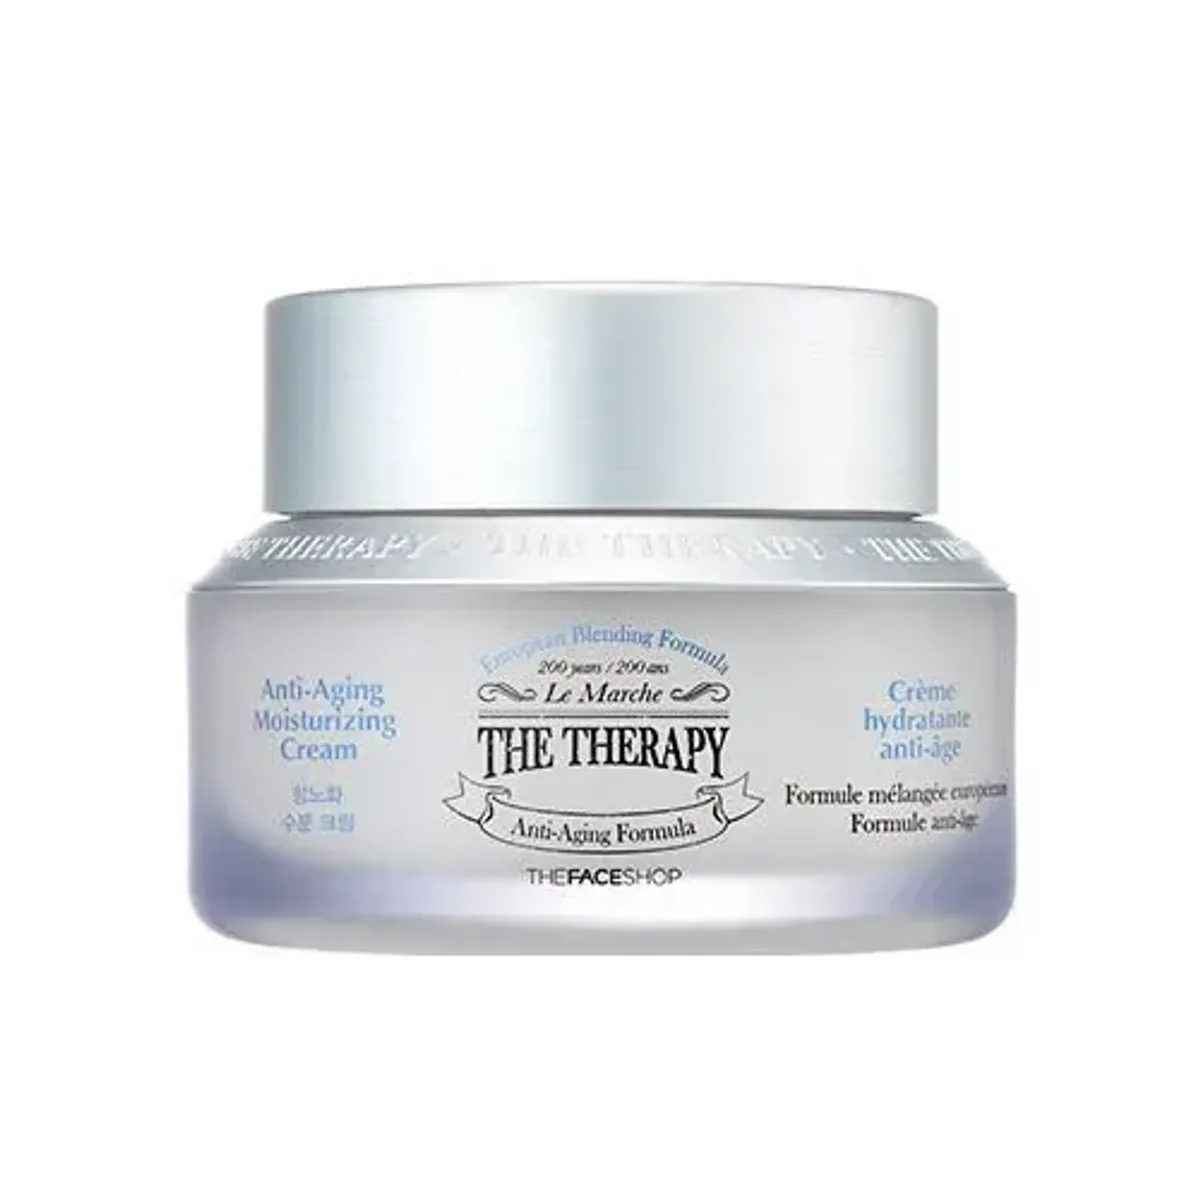 kem-duong-am-chuyen-sau-ngan-ngua-lao-hoa-the-therapy-anti-aging-moisturizing-cream-1